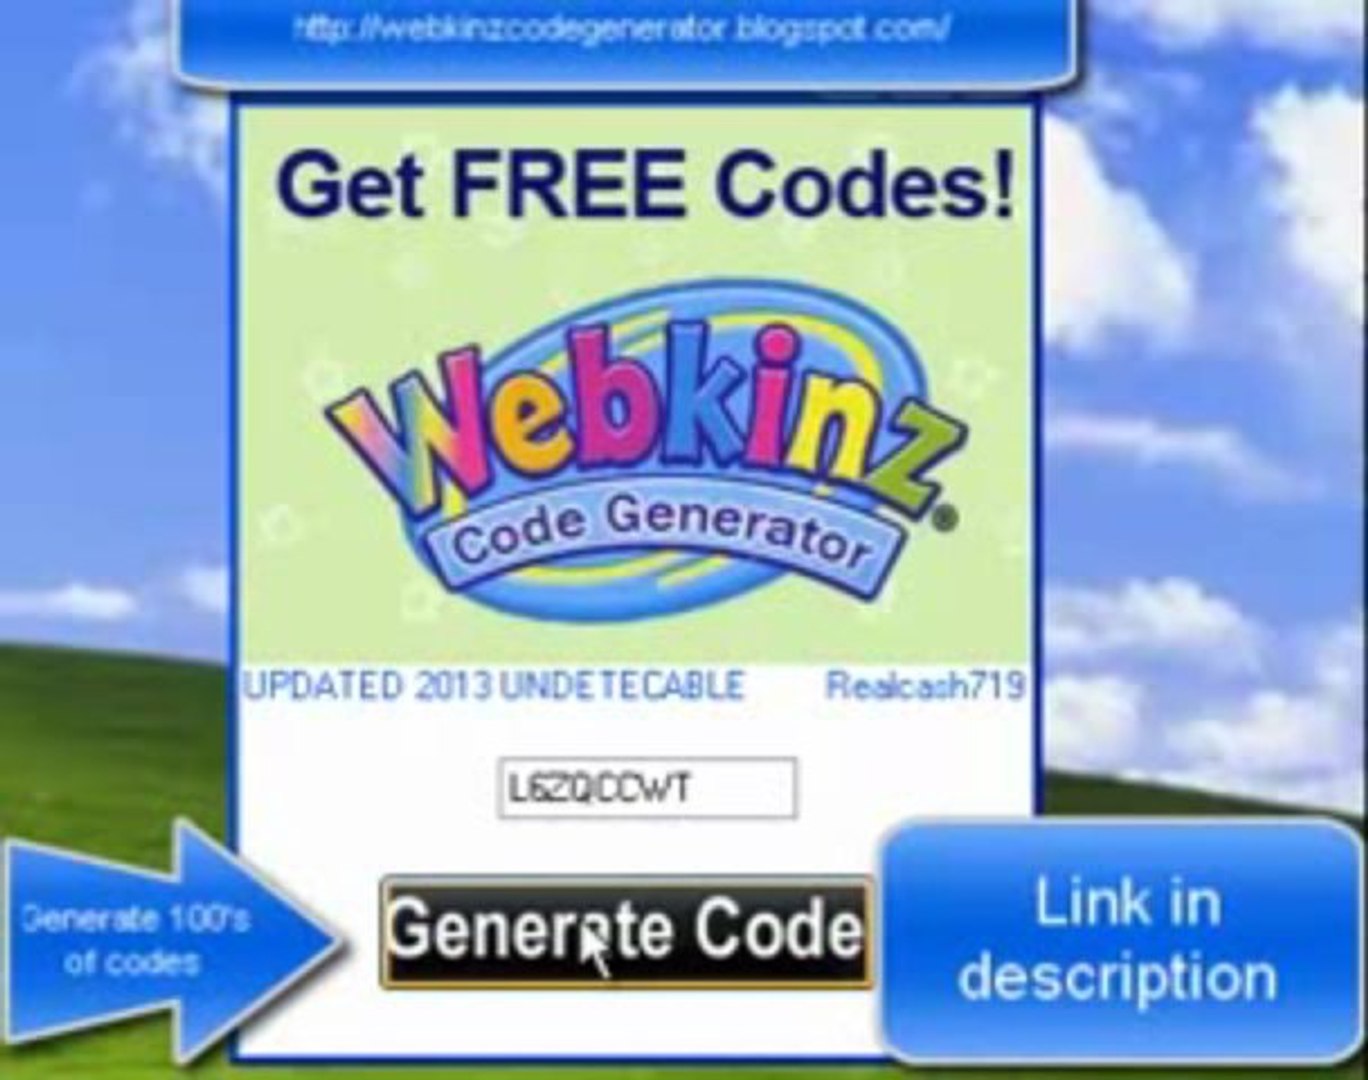 Webkinz Code Generator Générateur ( FREE Download ) June - July 2013 Update  - video Dailymotion